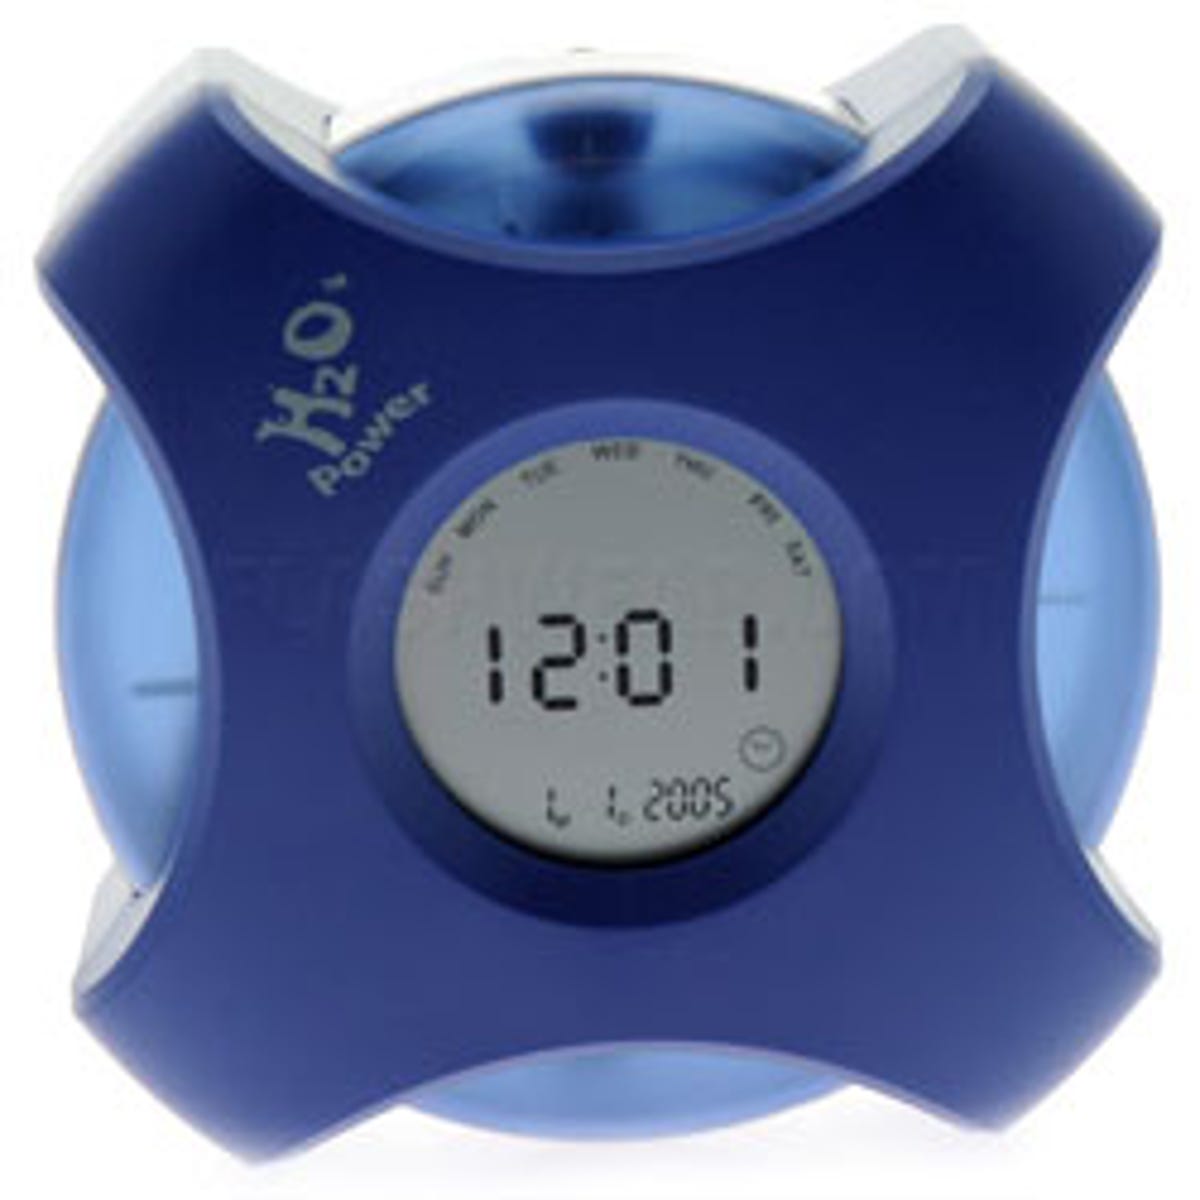 Water-powered alarm clock